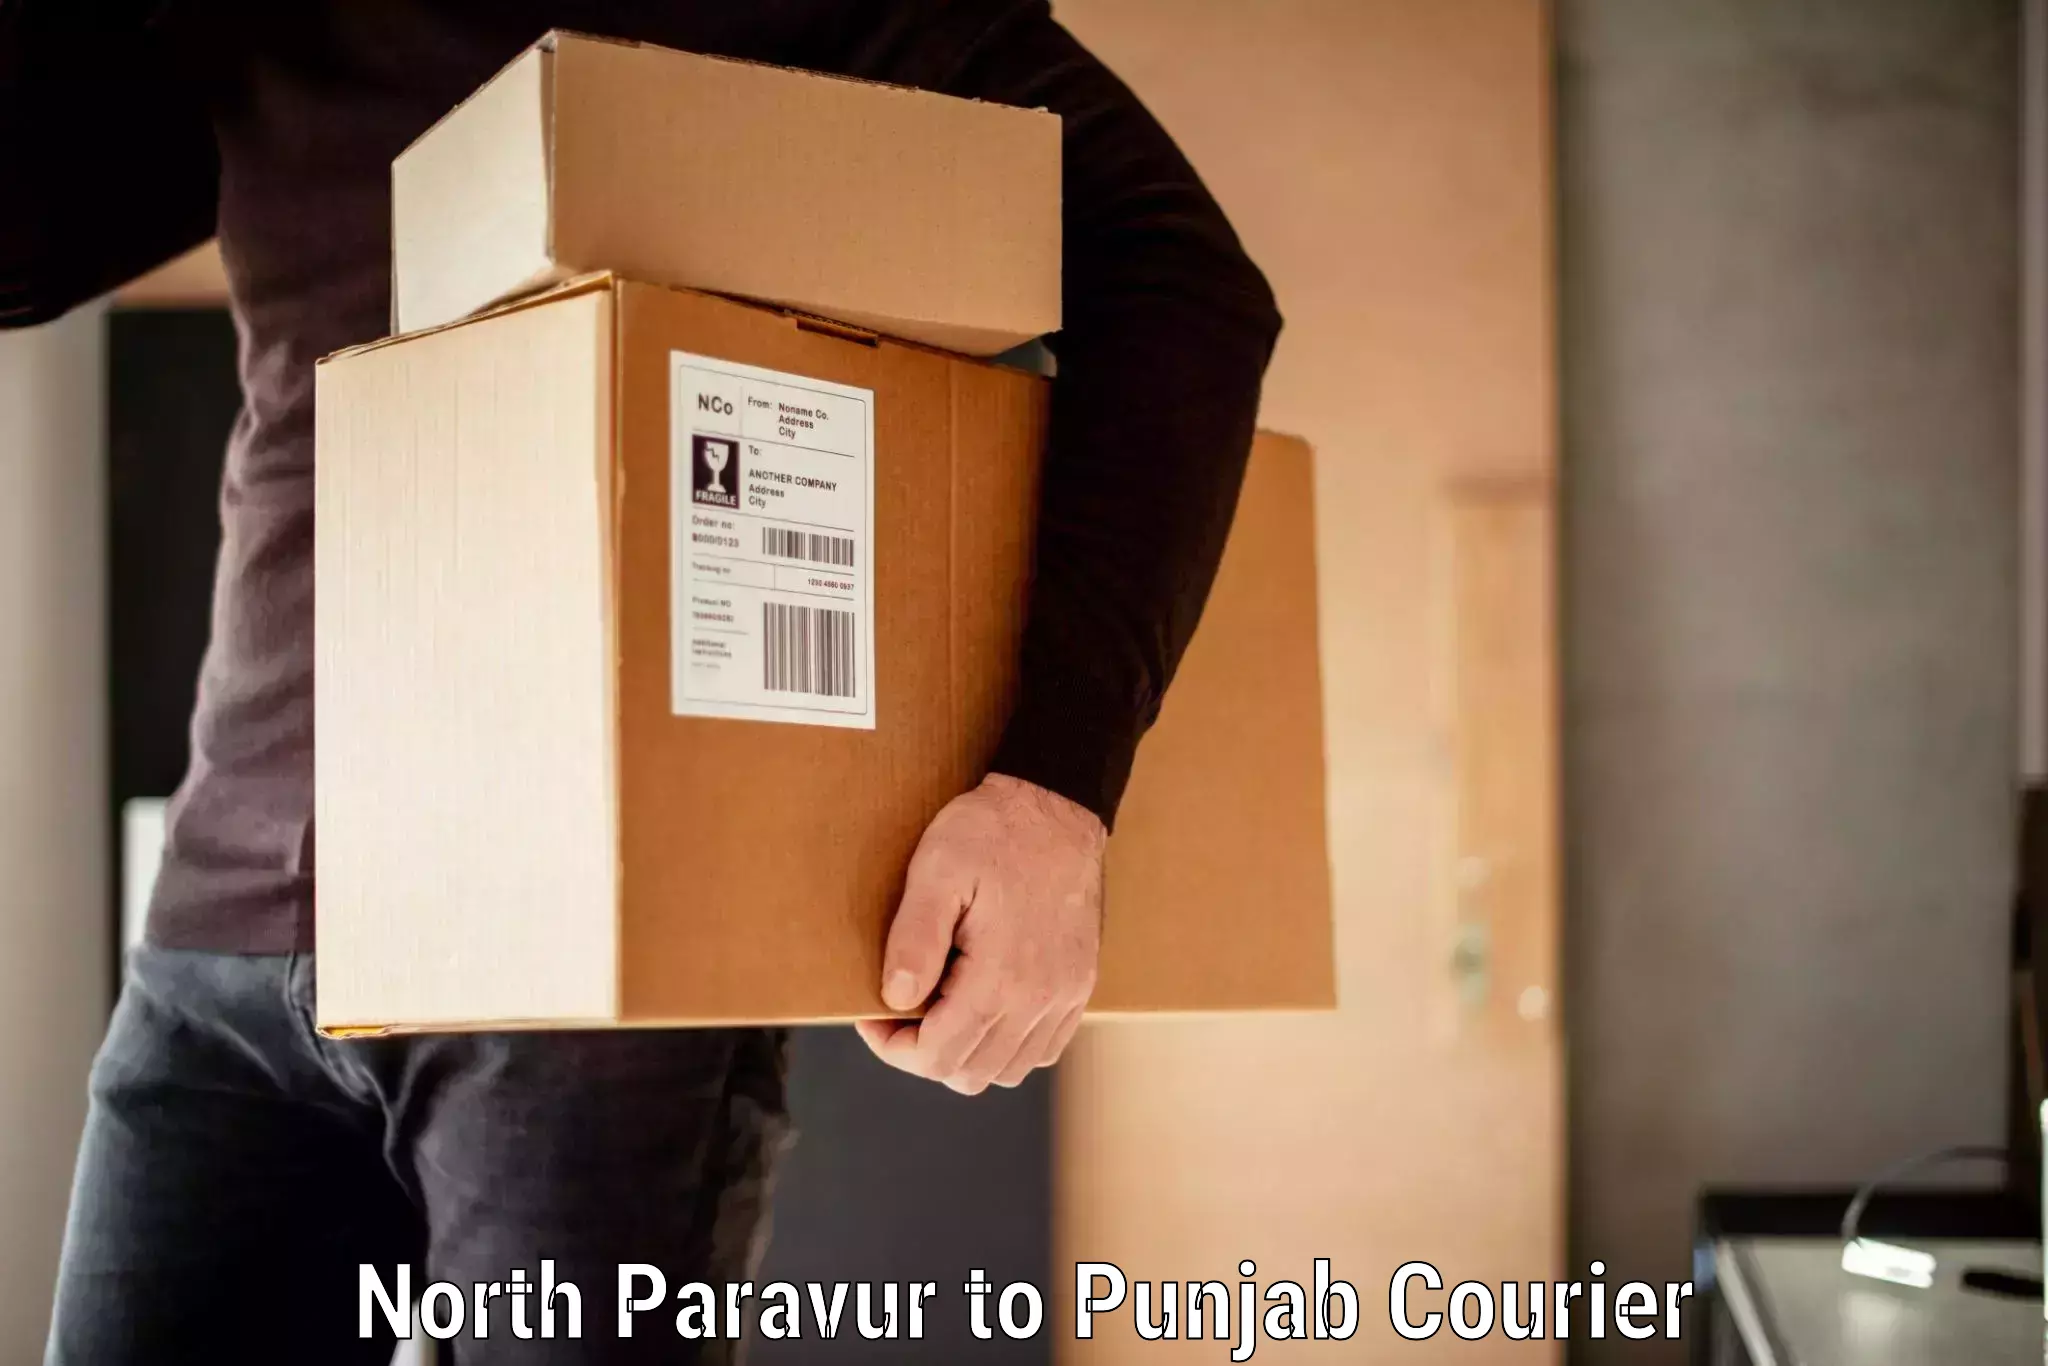 Emergency baggage service North Paravur to Punjab